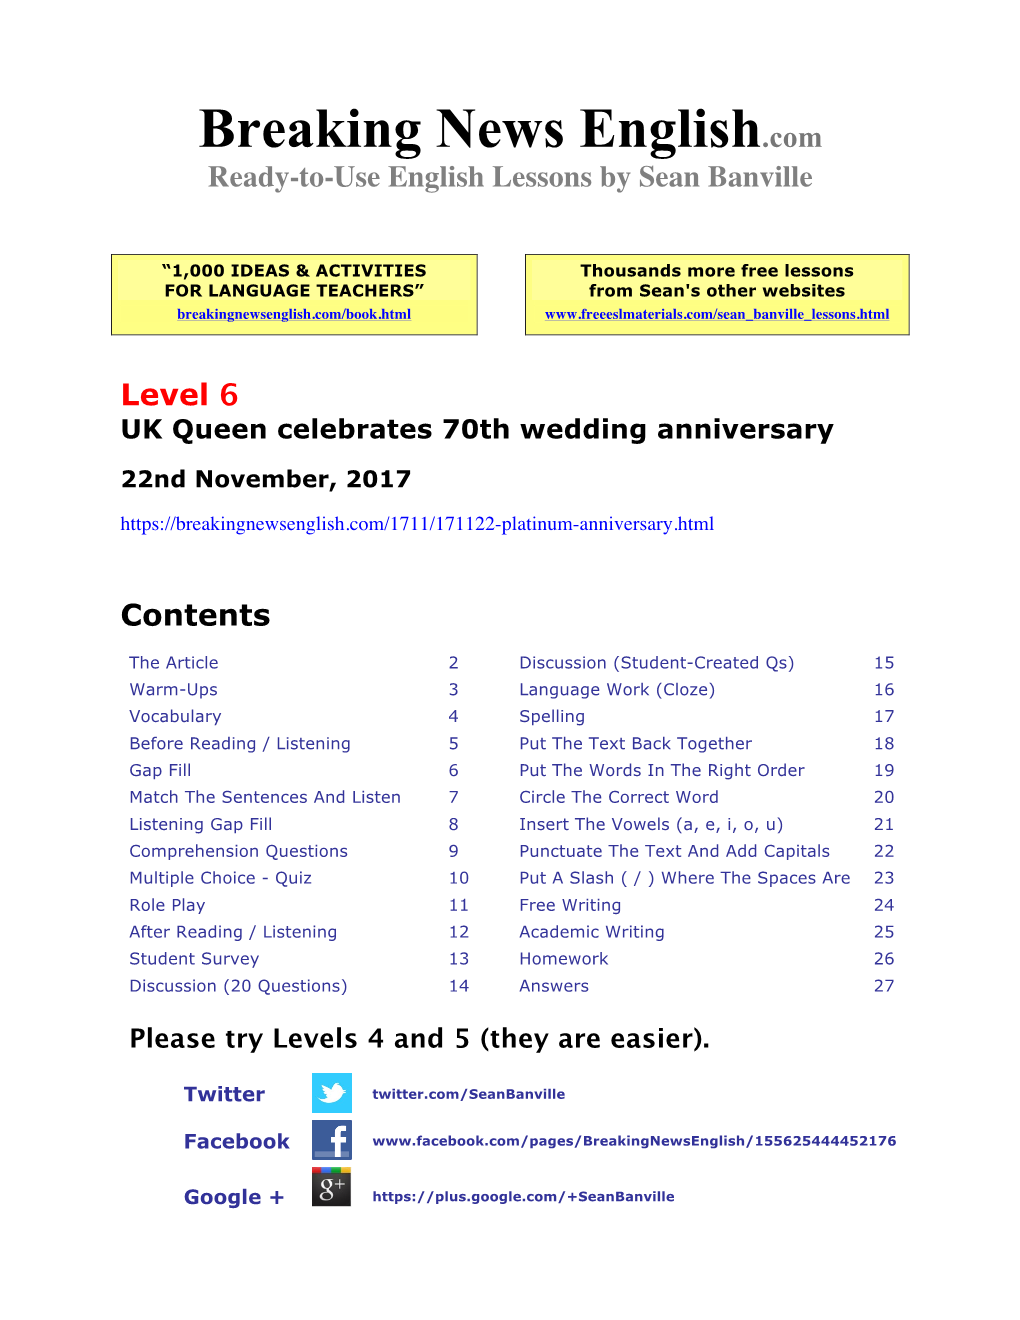 Level 6 UK Queen Celebrates 70Th Wedding Anniversary